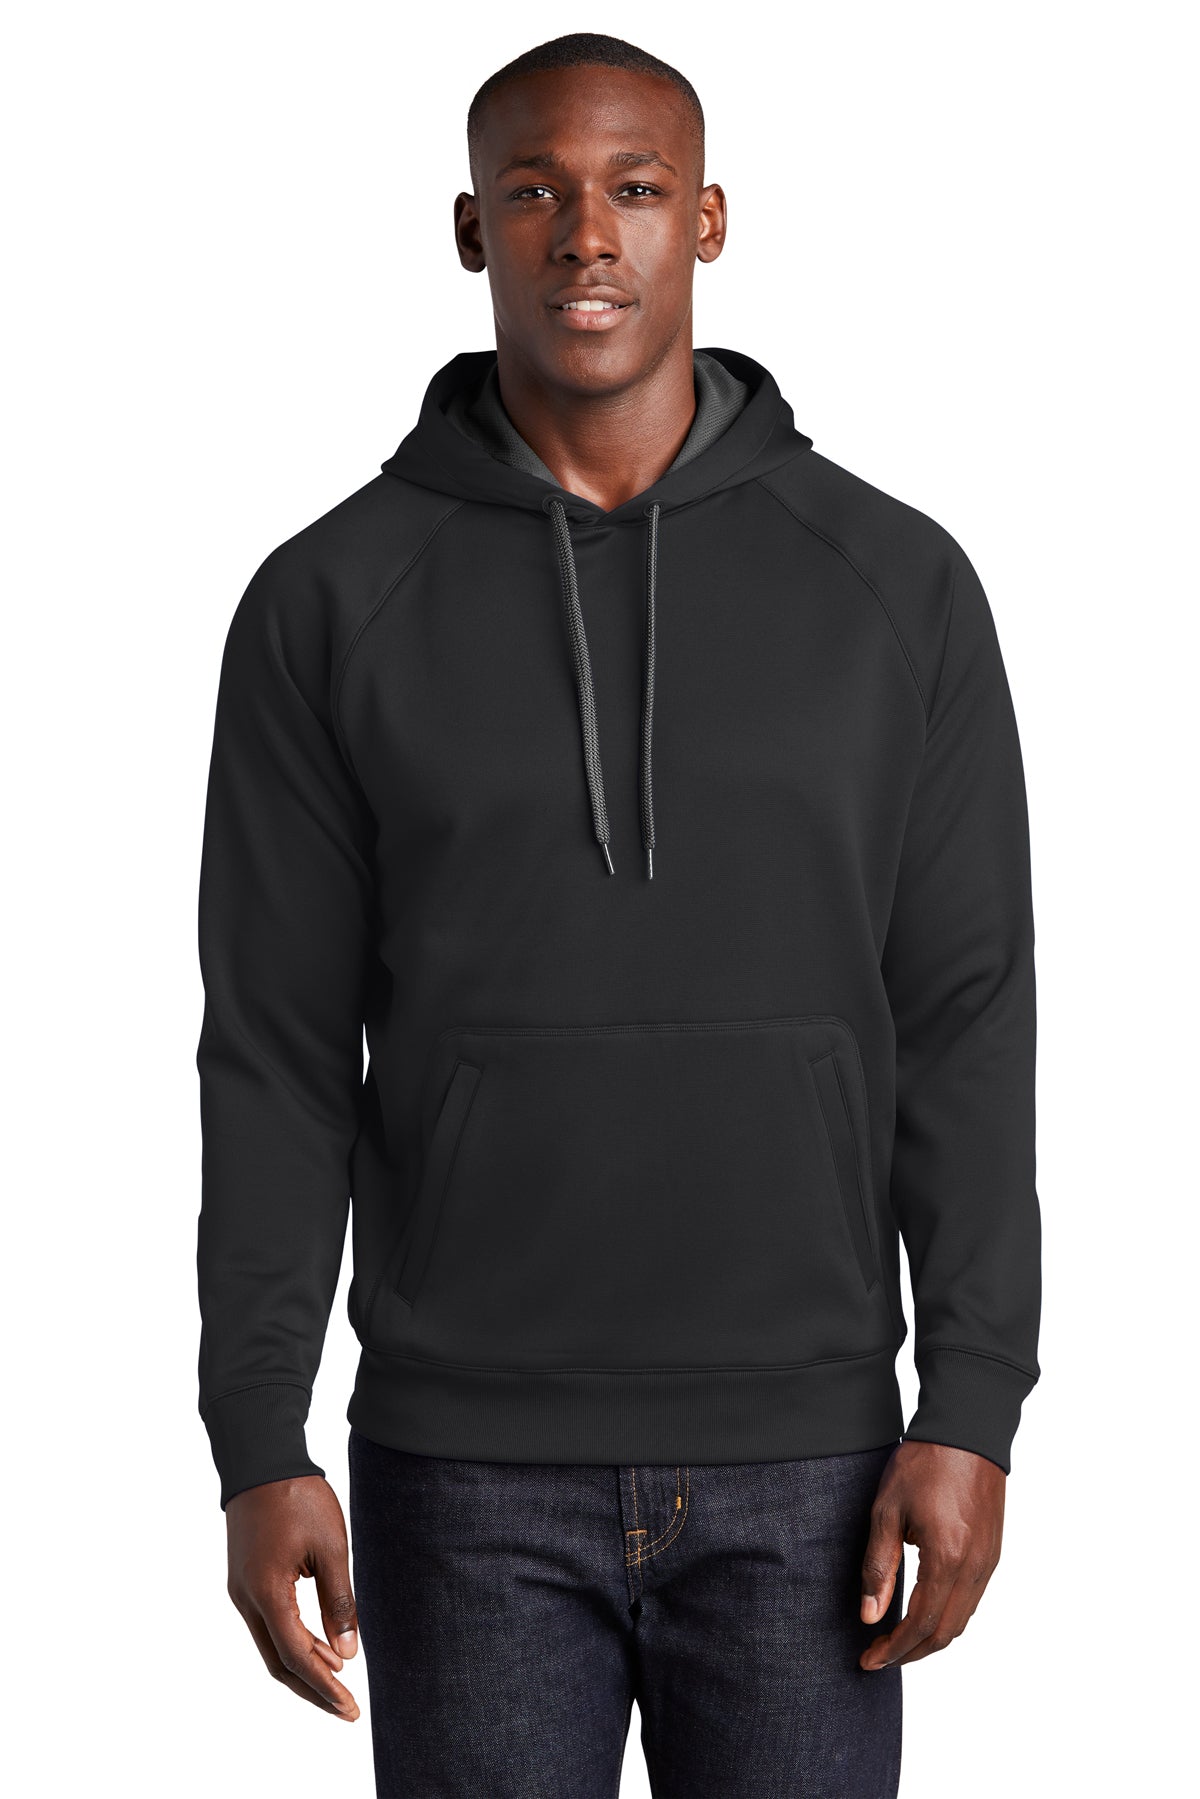 USASMDC Logo Sport-Tek® Tech Fleece Hooded Sweatshirt